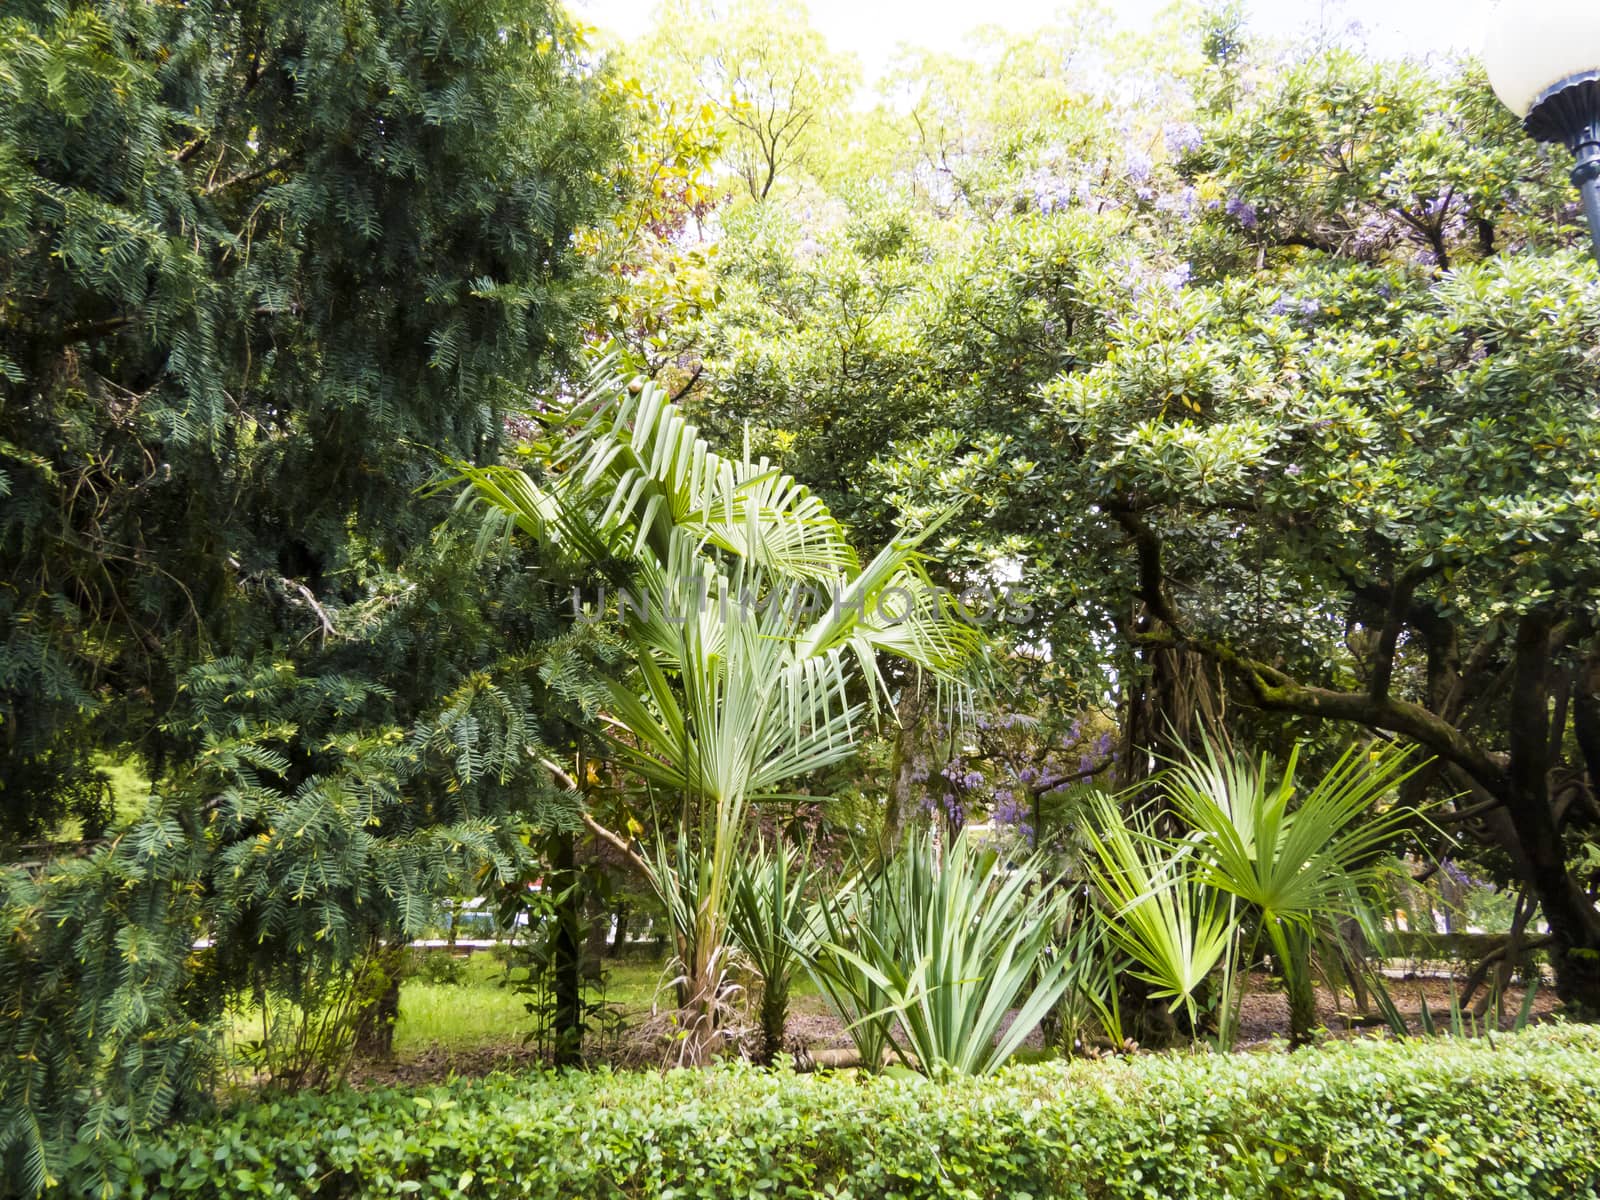 Palm trees in park by selezenj